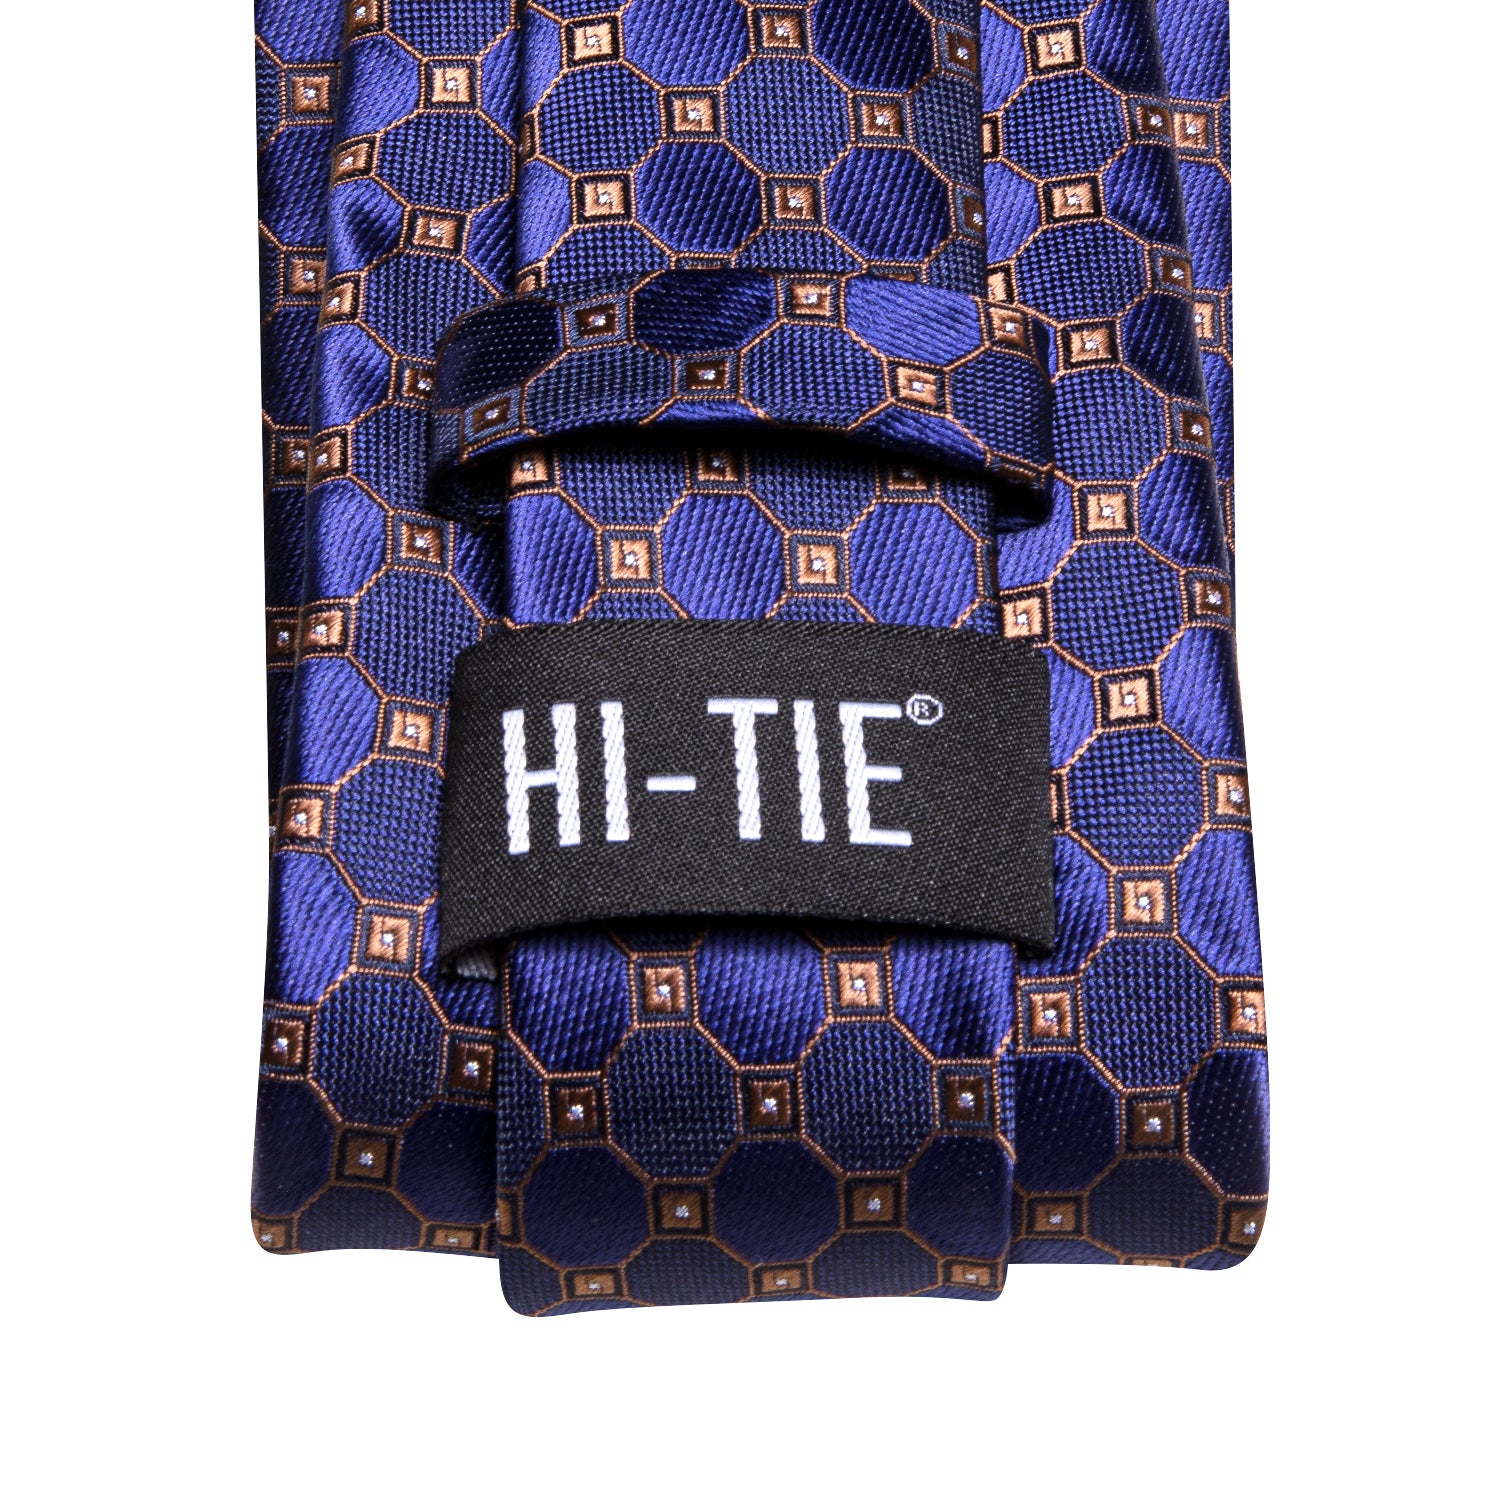 Hi-Tie New Purple Novelty Men's Tie Pocket Square Cufflinks Set